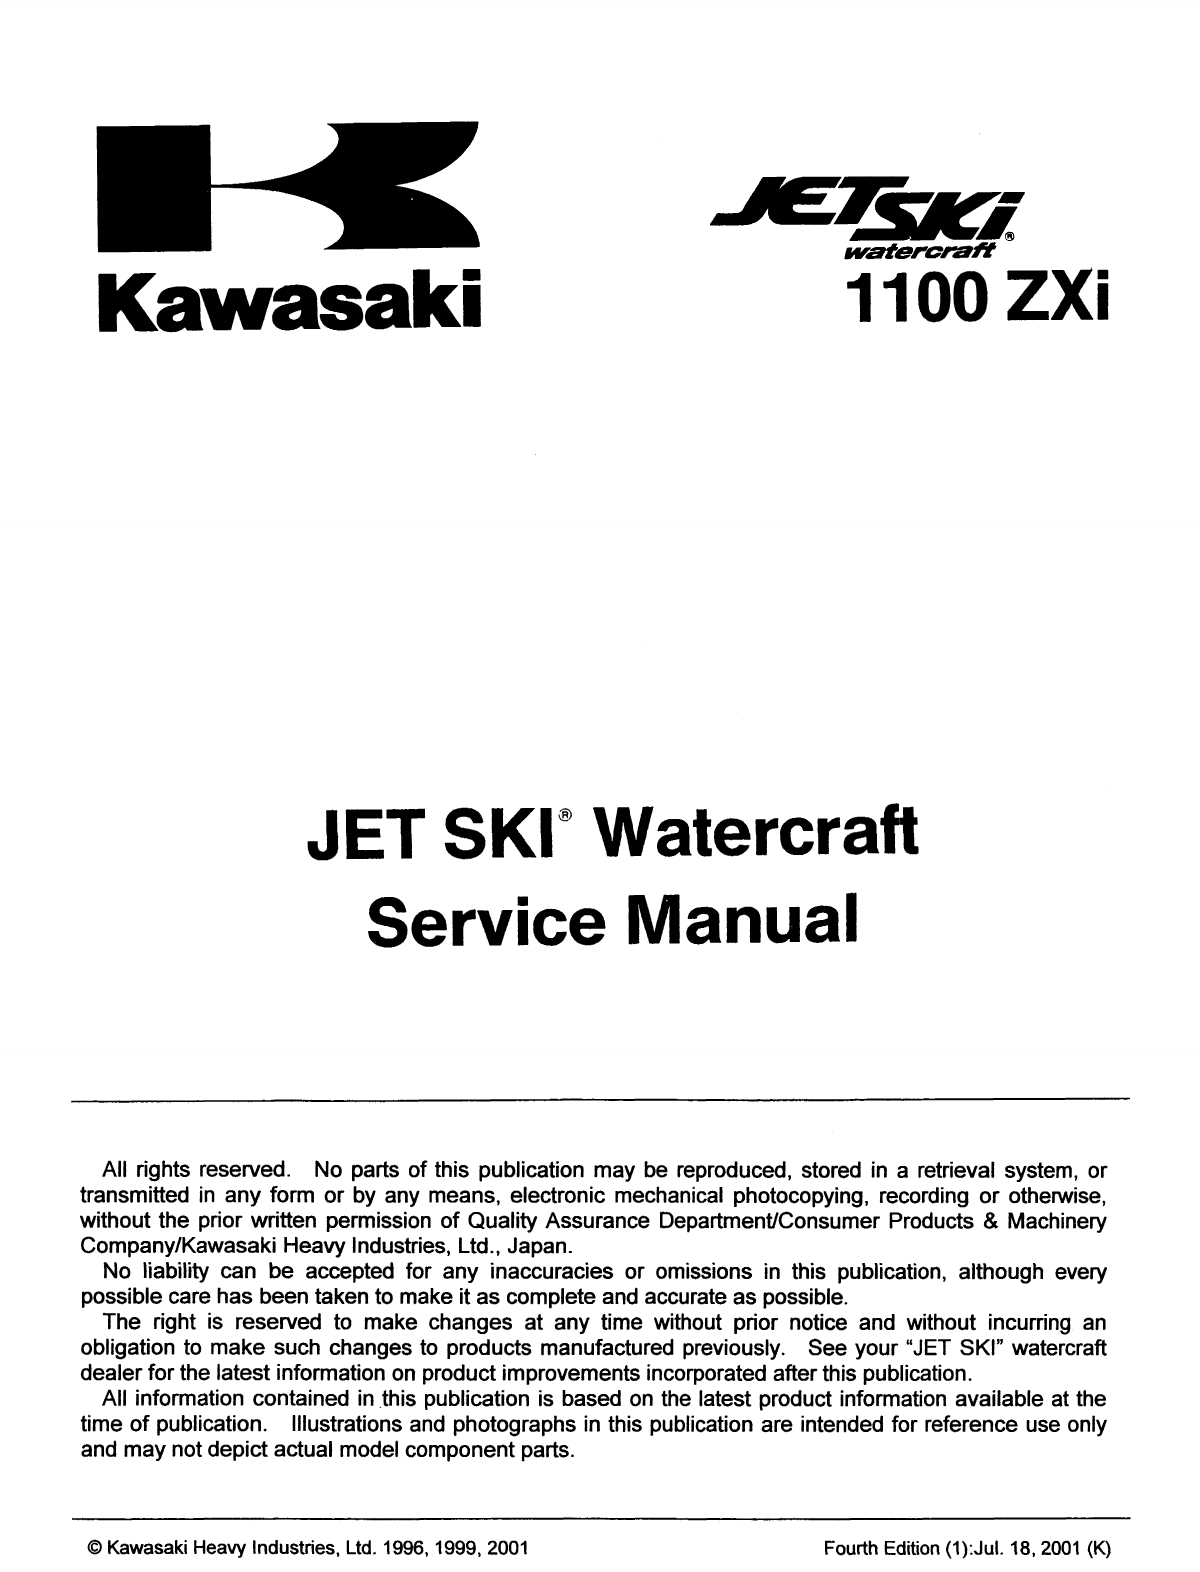 1996-2002 Kawasaki 1100 ZXi Jet Ski service manual Preview image 3